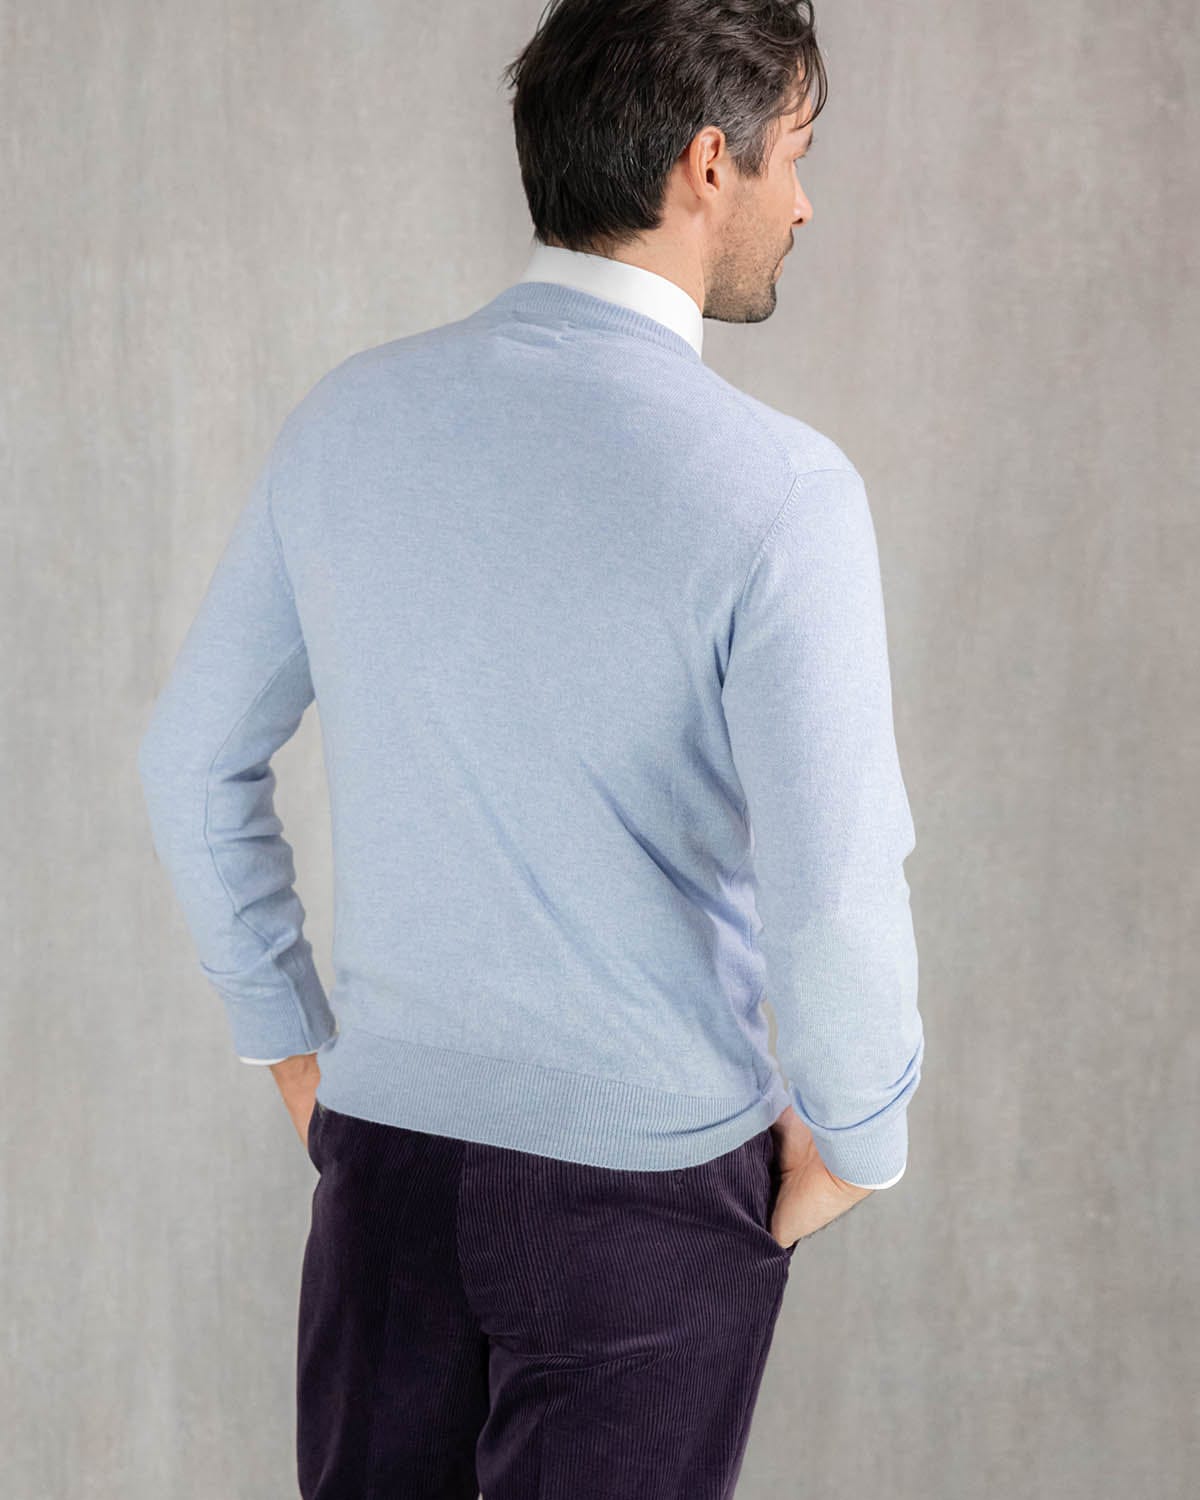 Plain Sky Blue 2-Ply Cashmere V-Neck Sweater